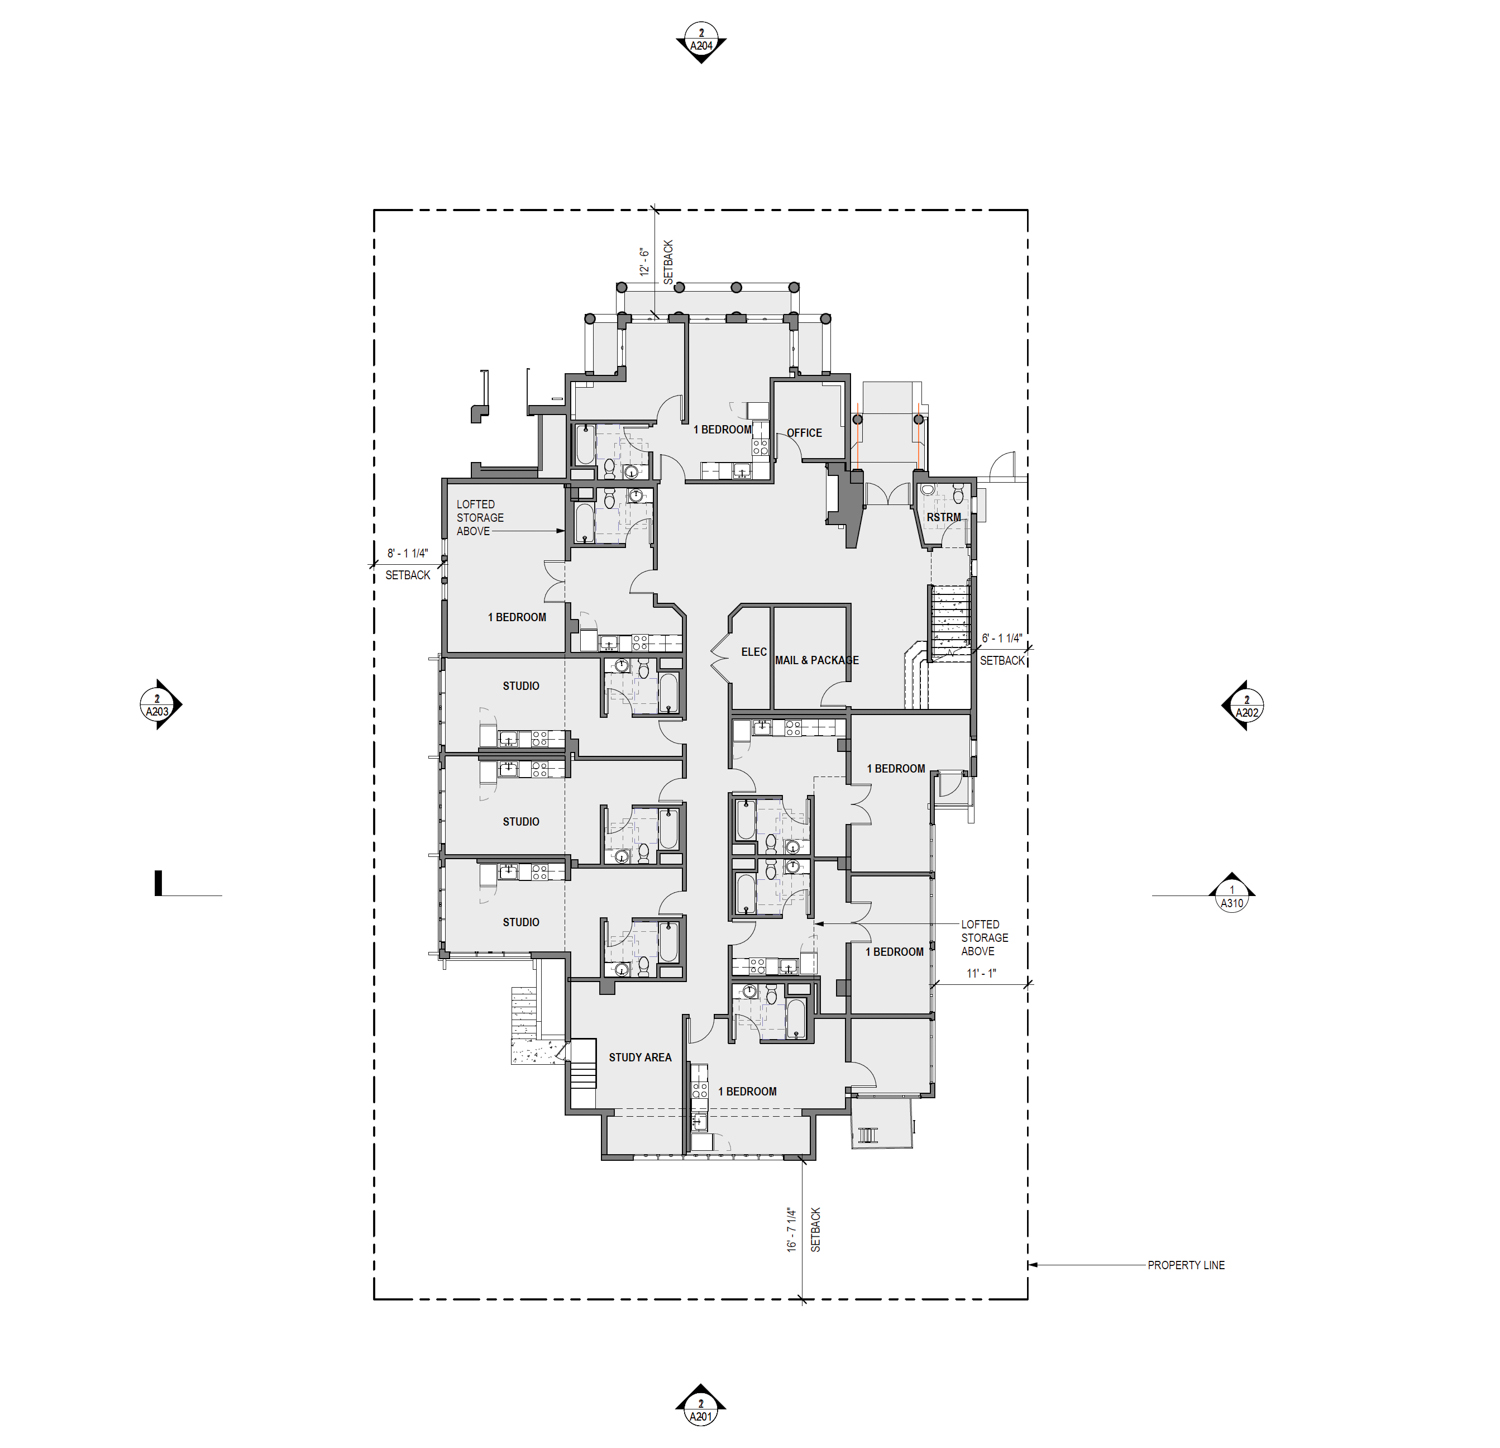 2680 Bancroft Way ground-level floor plan, illustration by Studio KDA